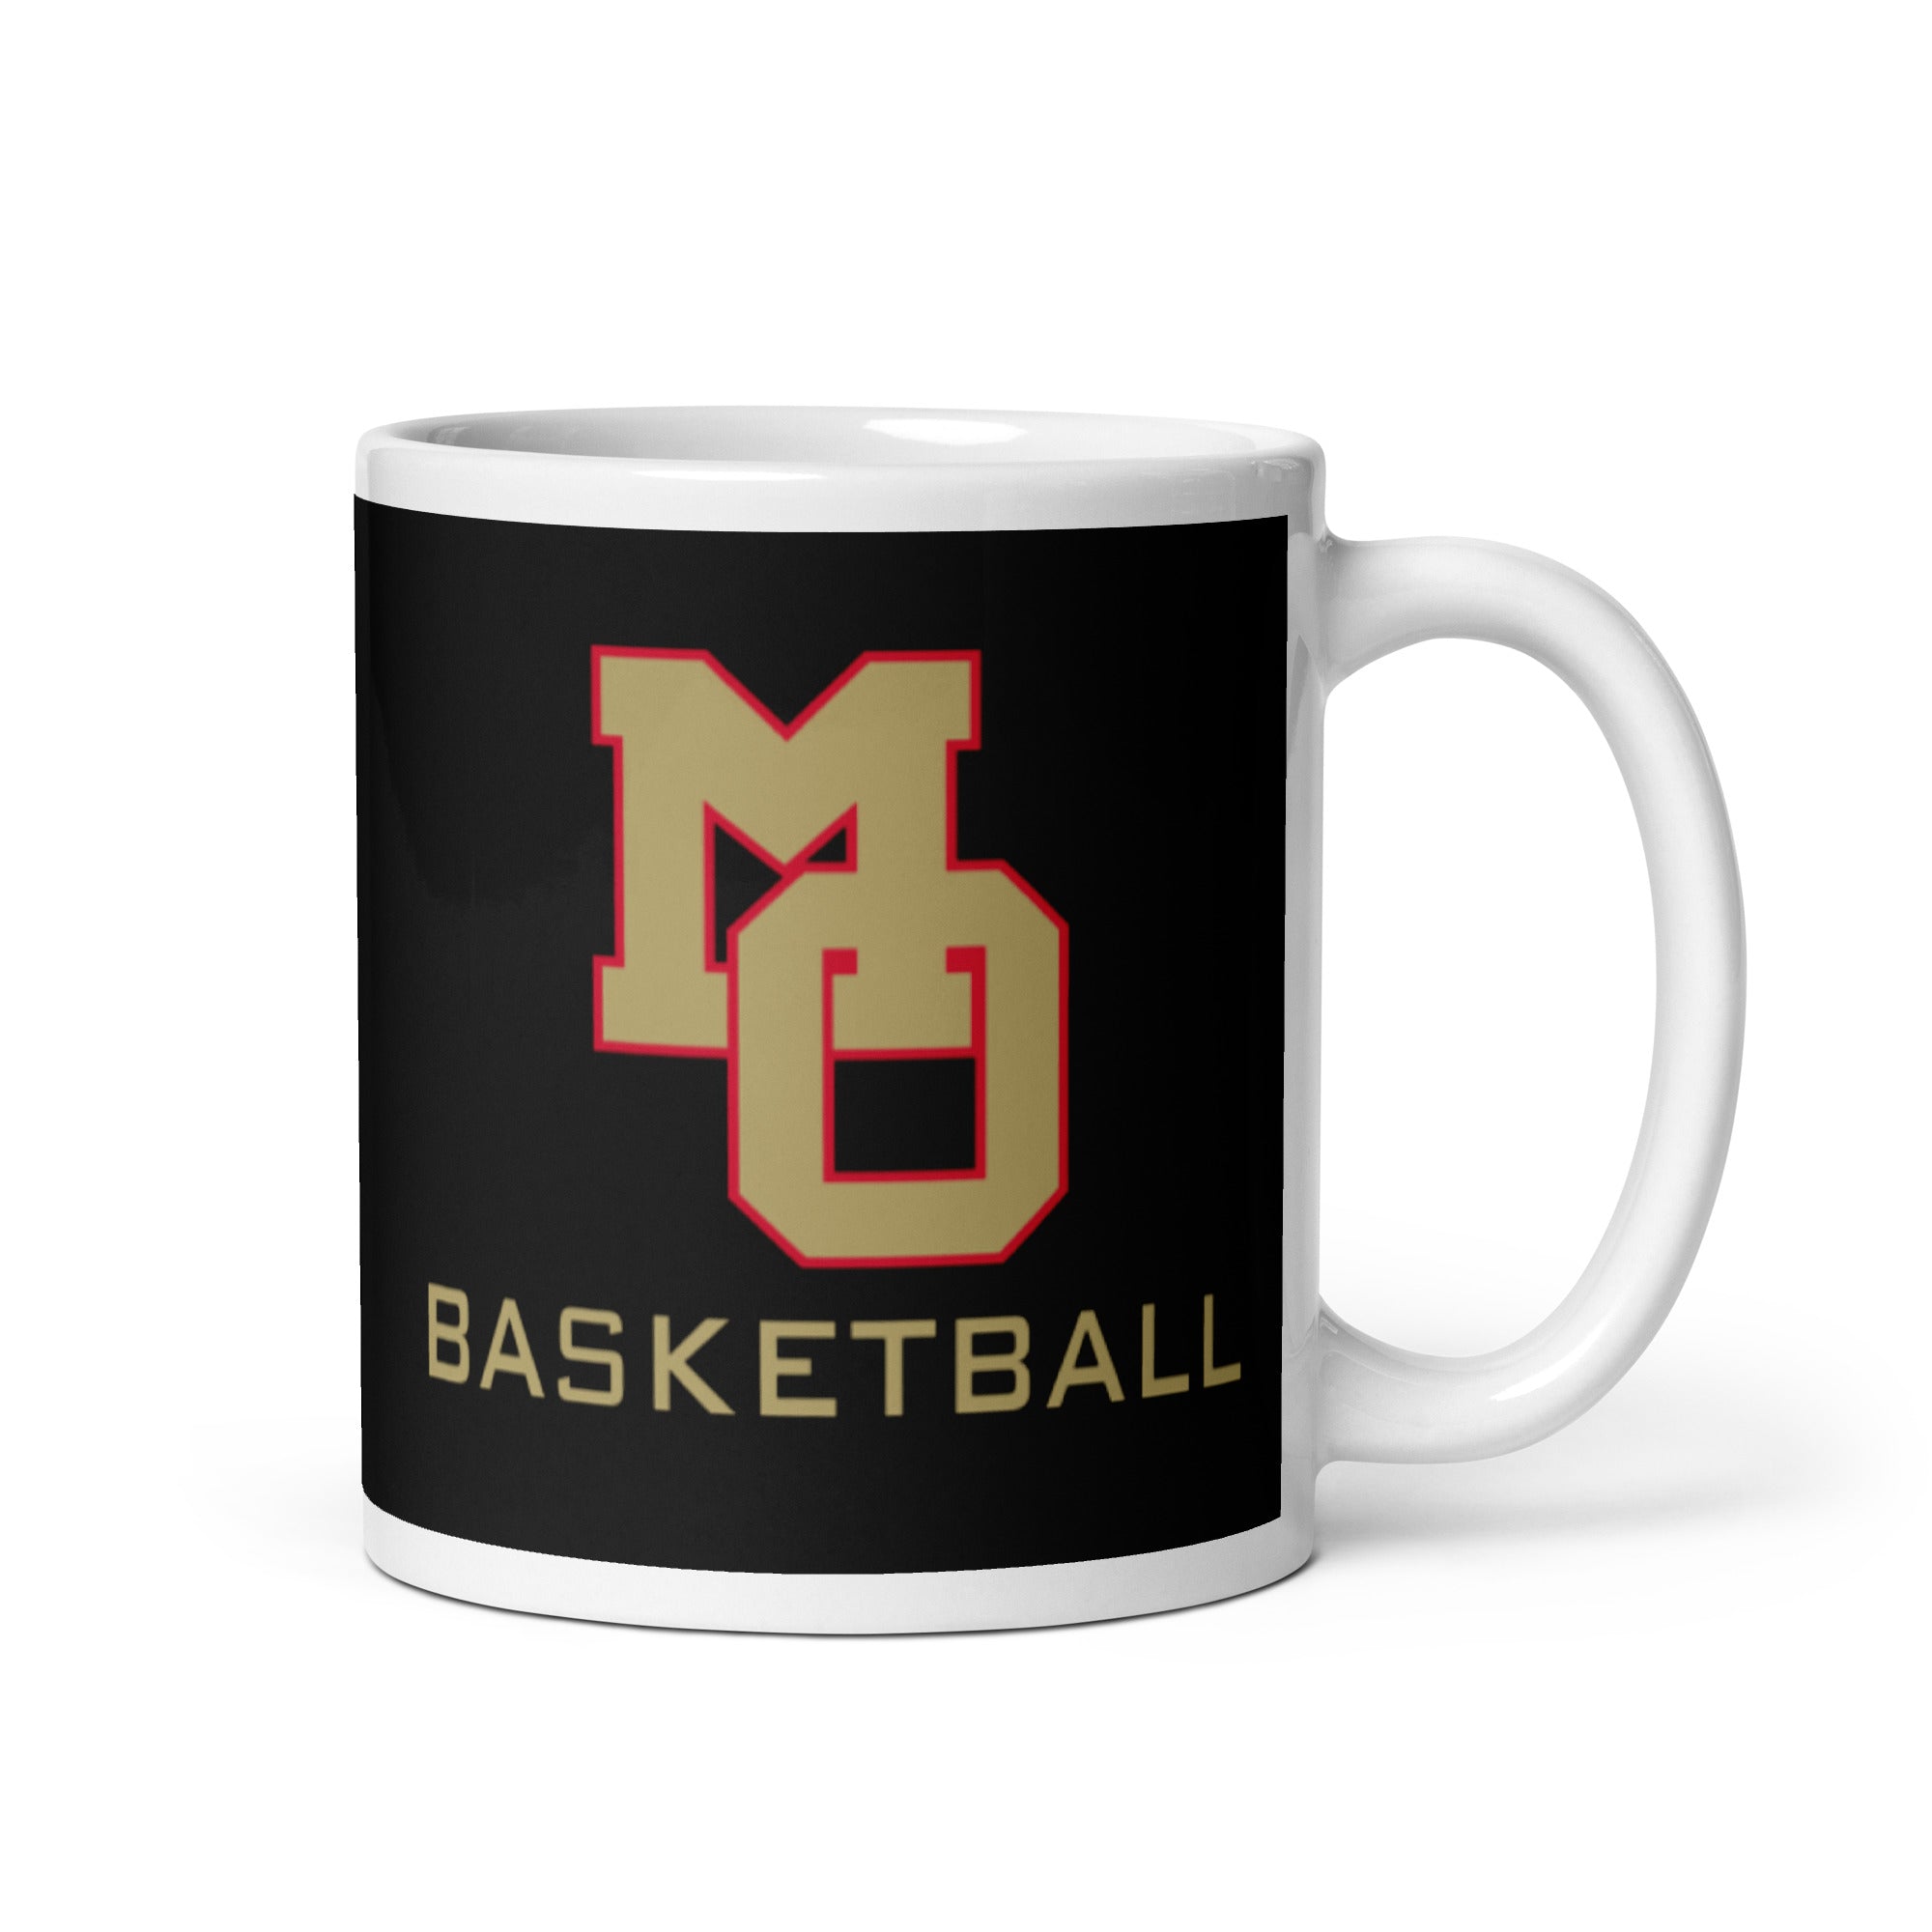 MO White glossy mug